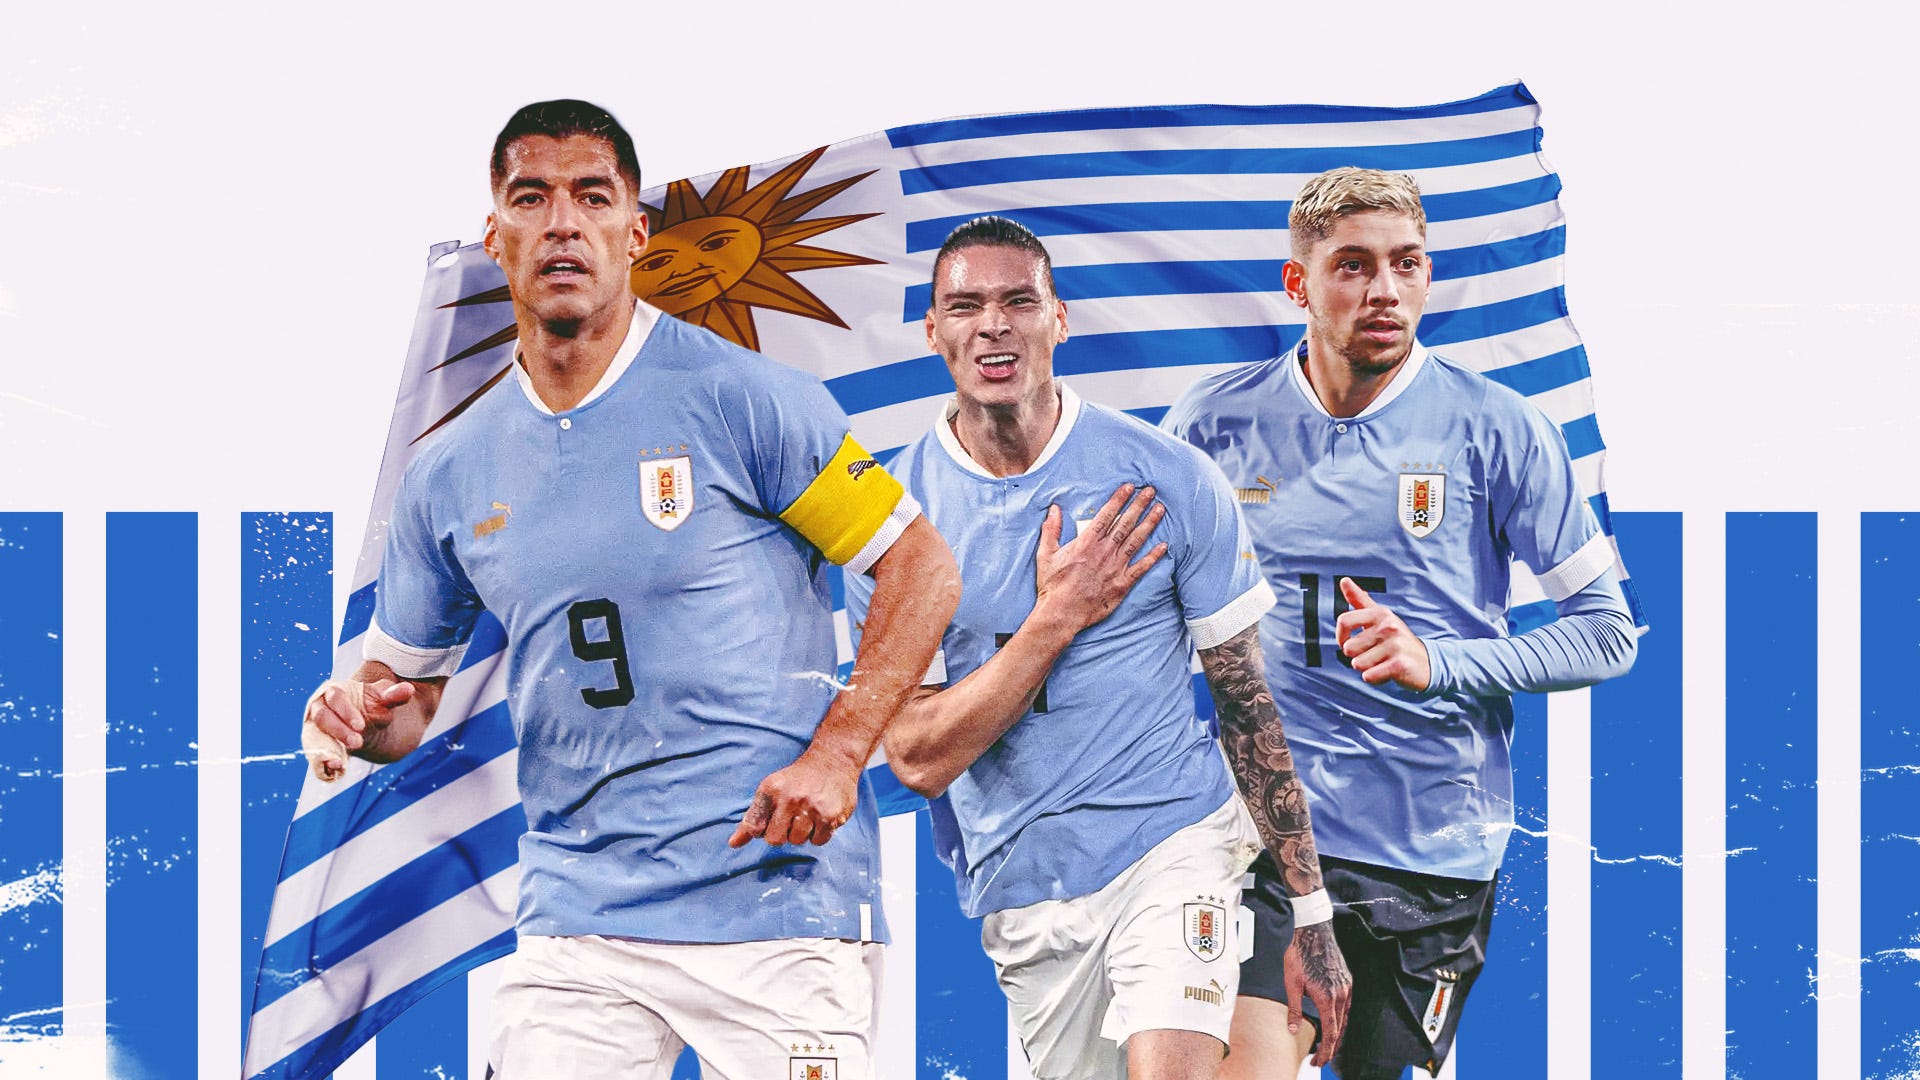 Lịch sử của Uruguay tại World Cup